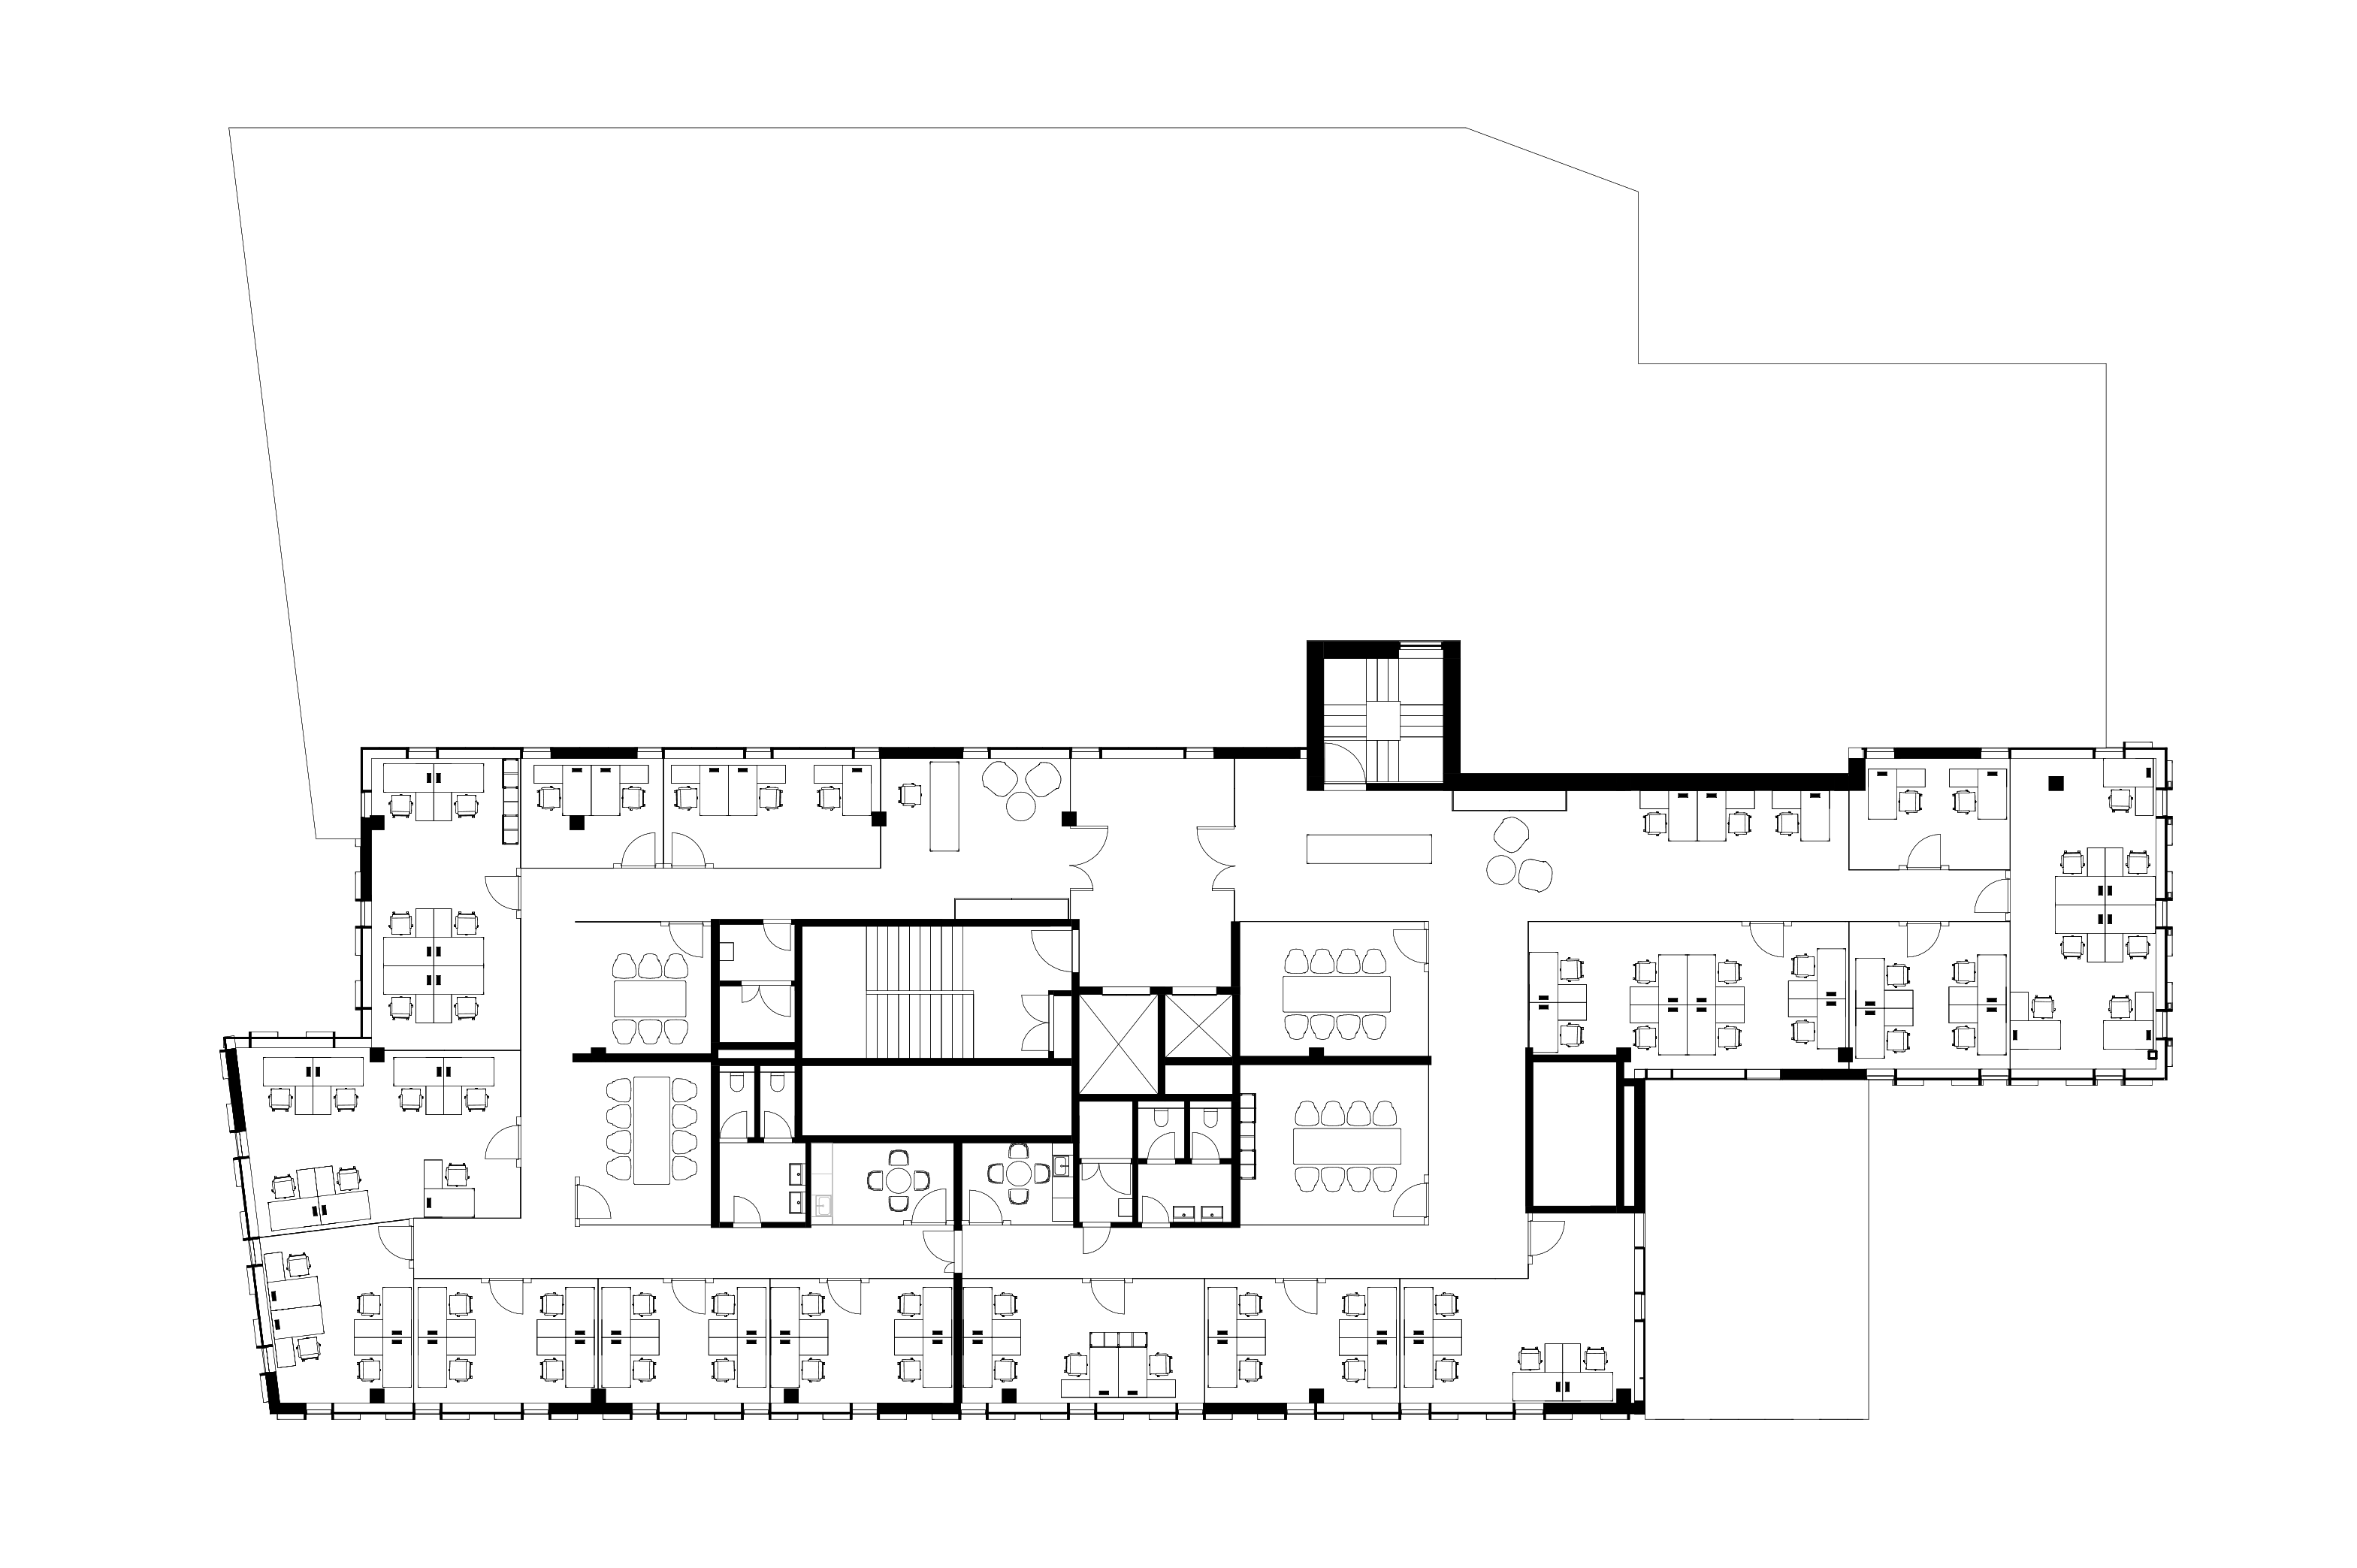 Sixth floor plan